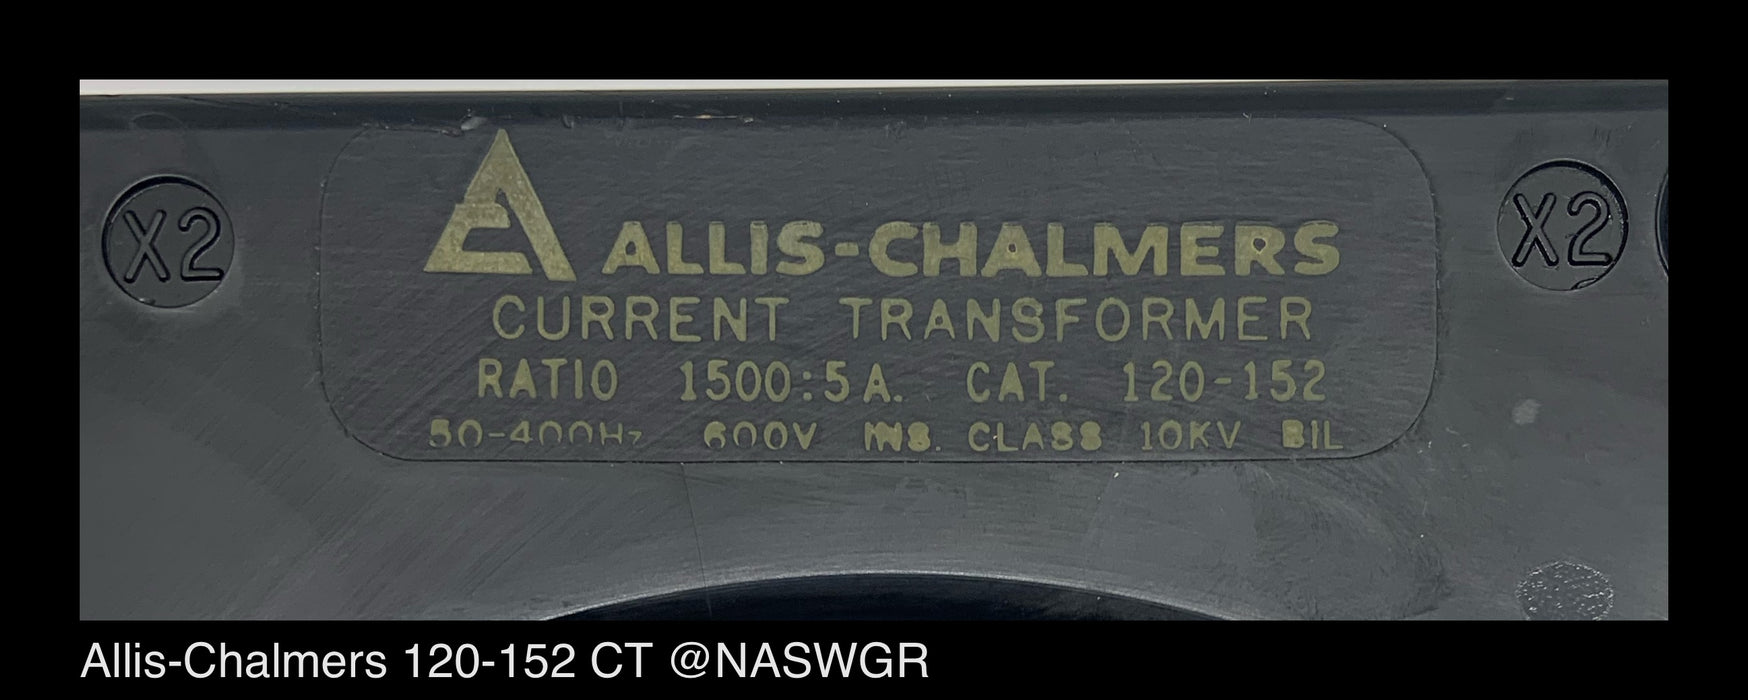 Allis-Chalmers 120-152 Current Transformer ~ 1500:5